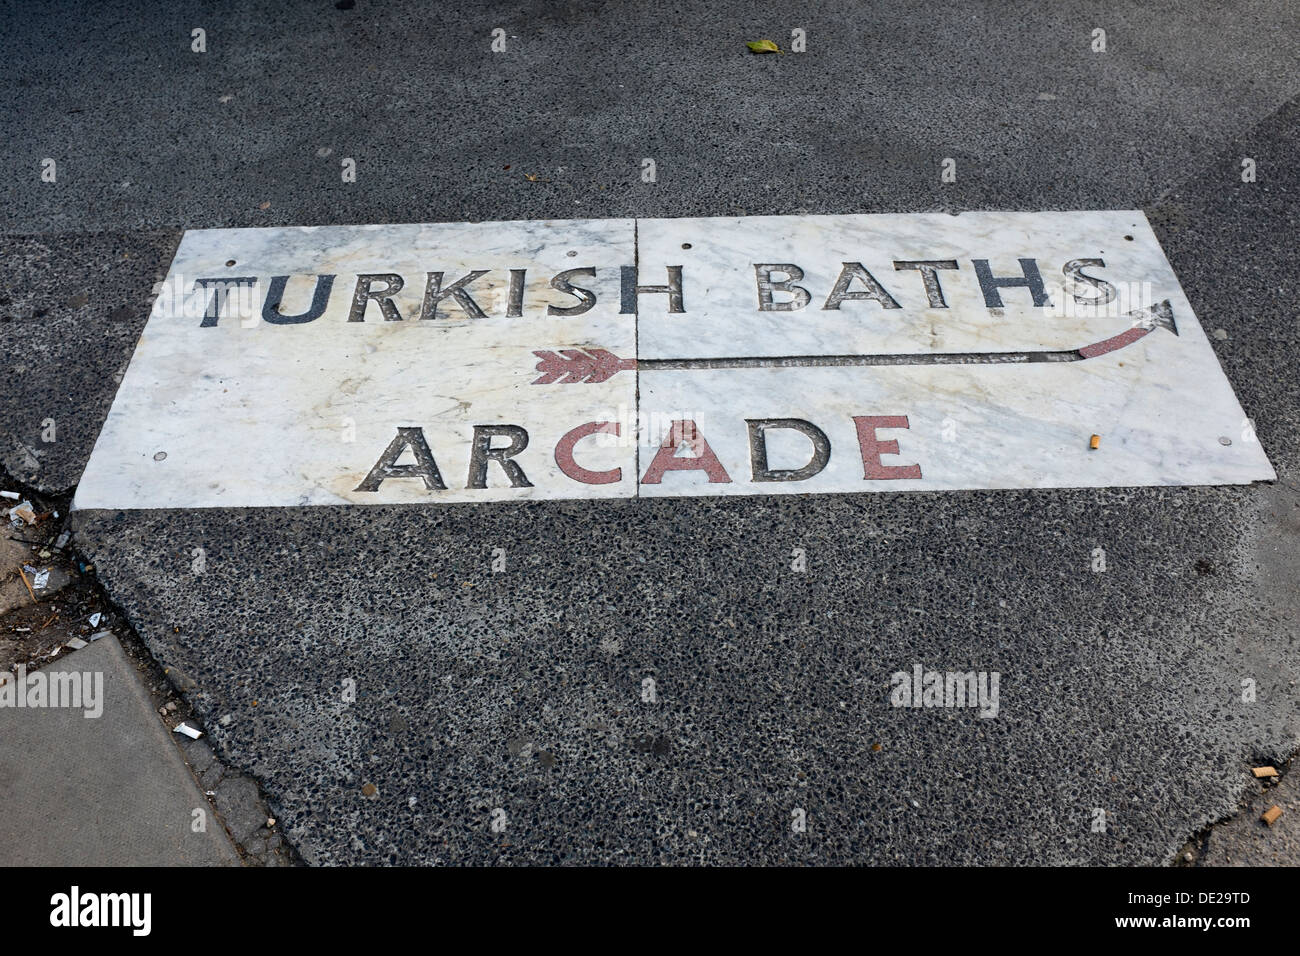 Bagni turchi Arcade Steet marciapiede segno Southampton Row London Foto Stock